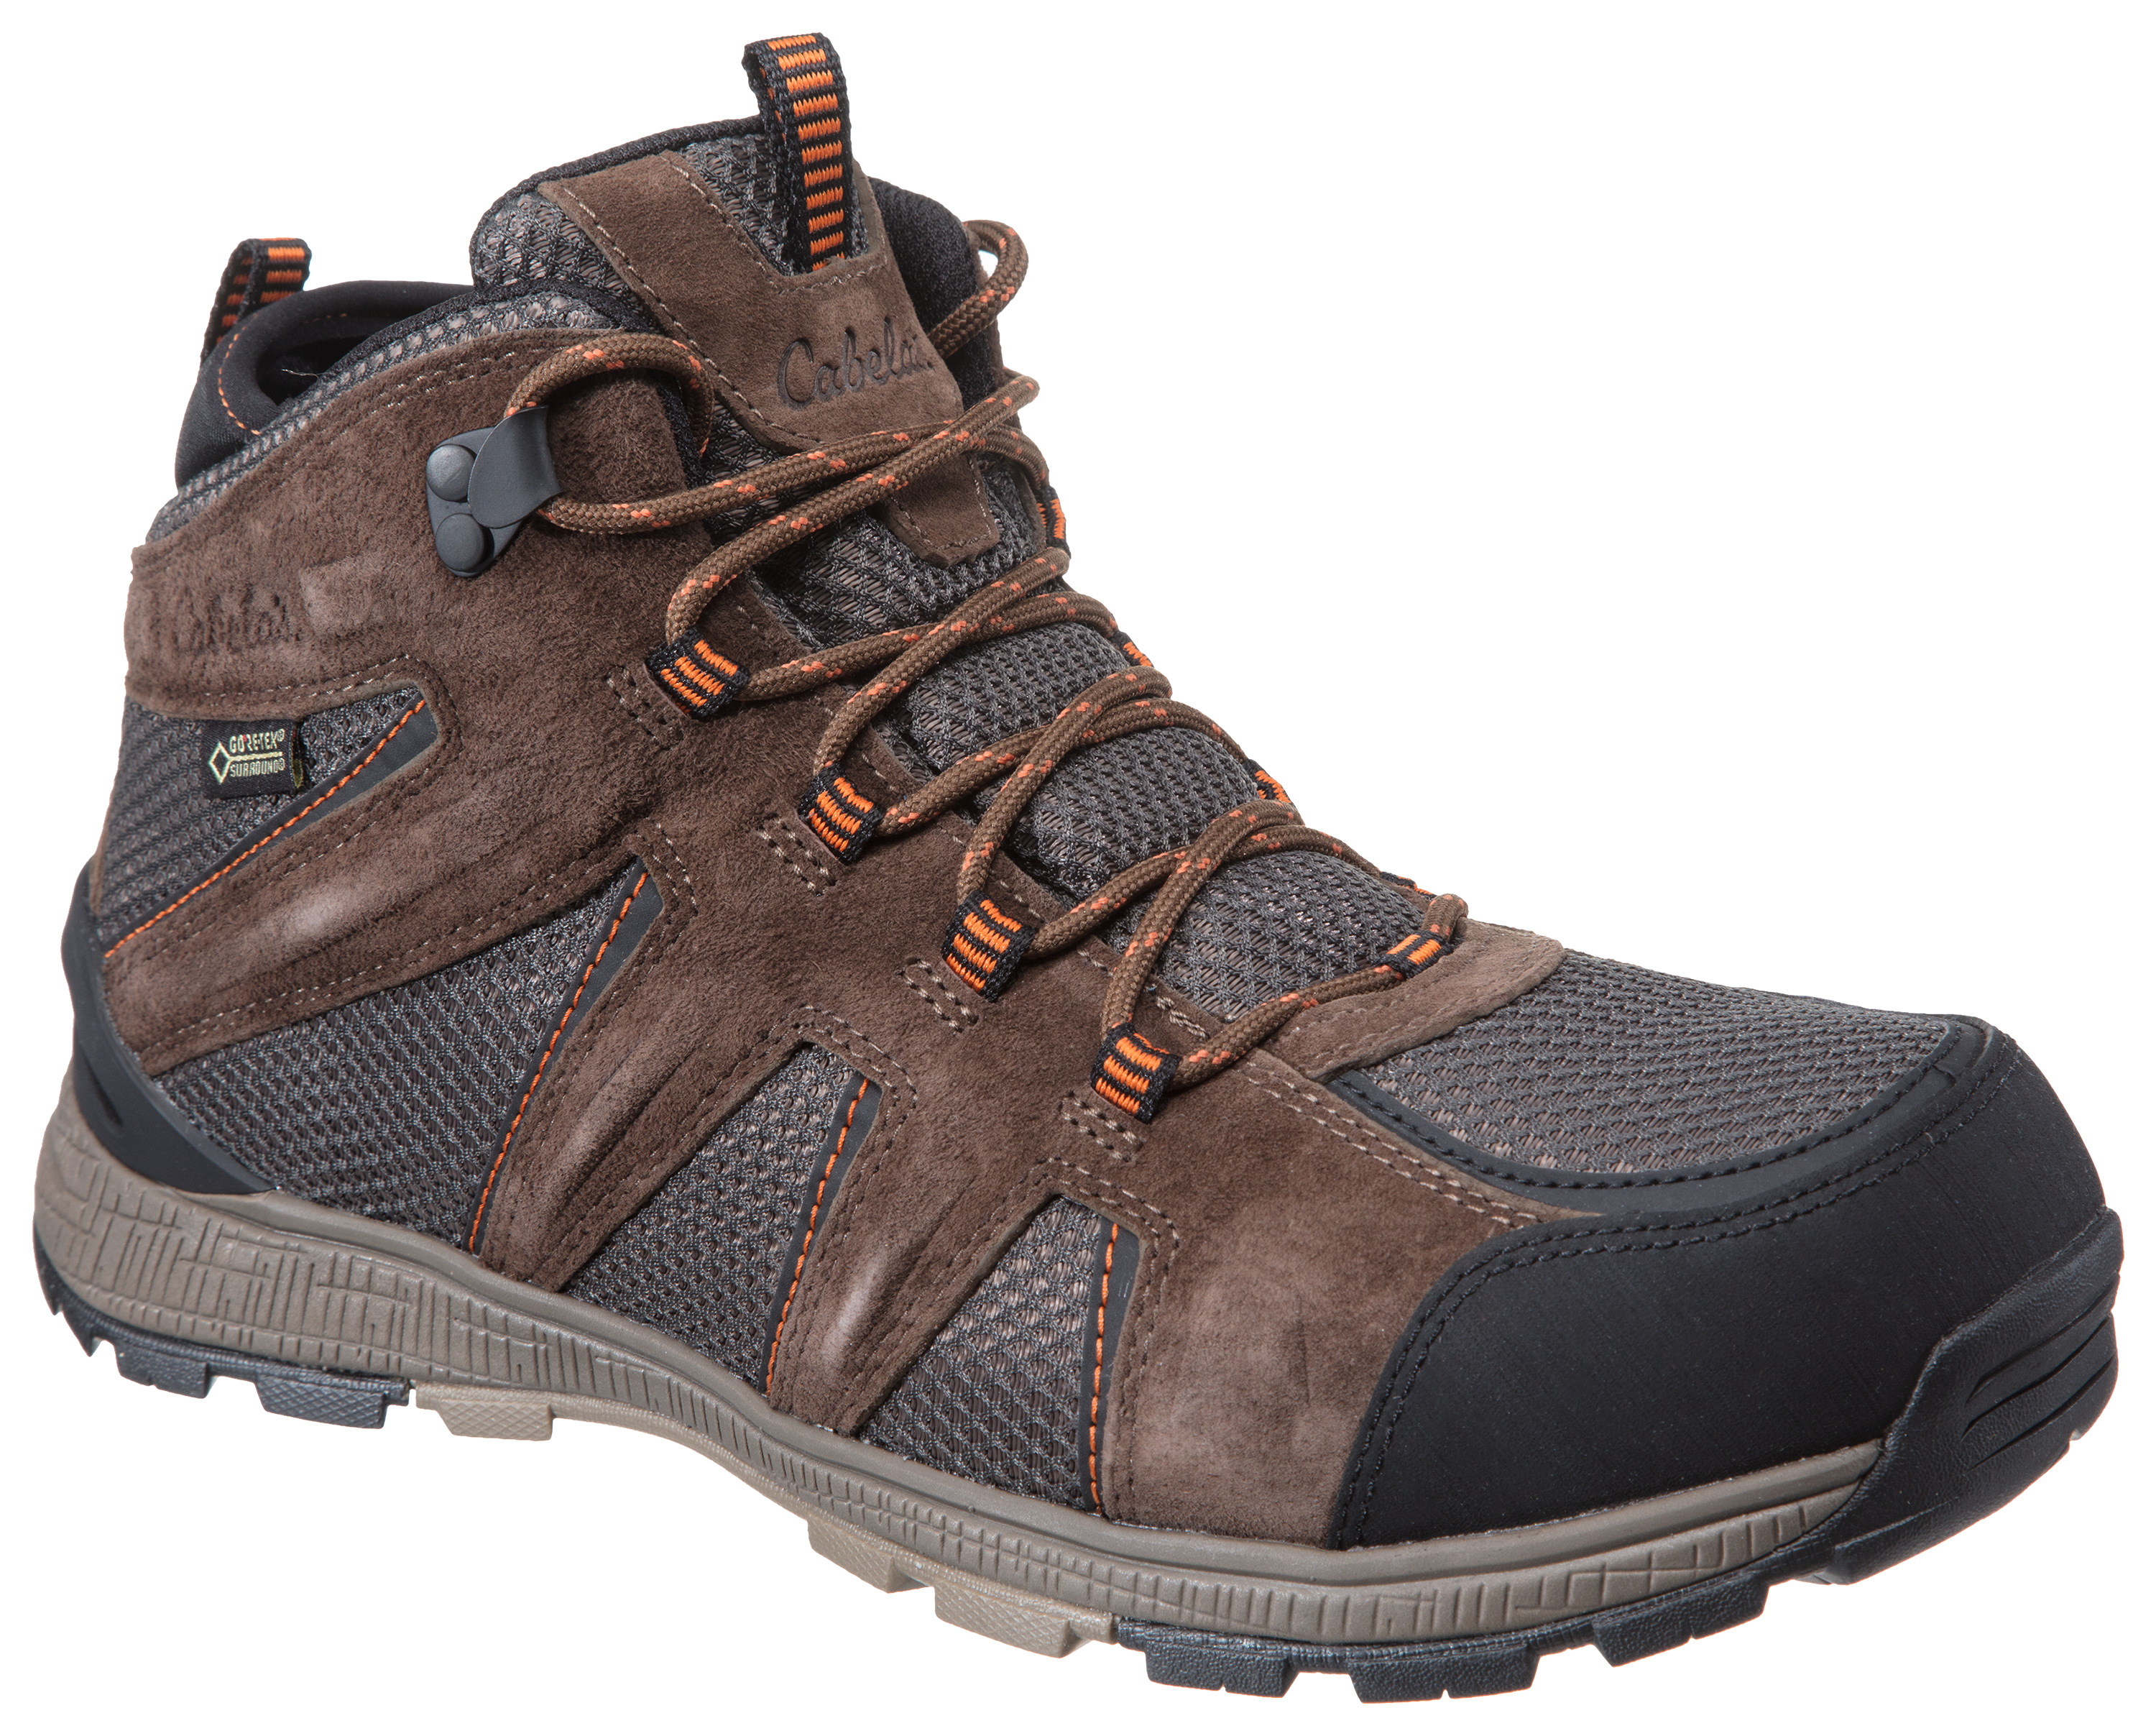 Cabela's 360 Mid GORE-TEX Hiking Boots for Men - Teak - 12M